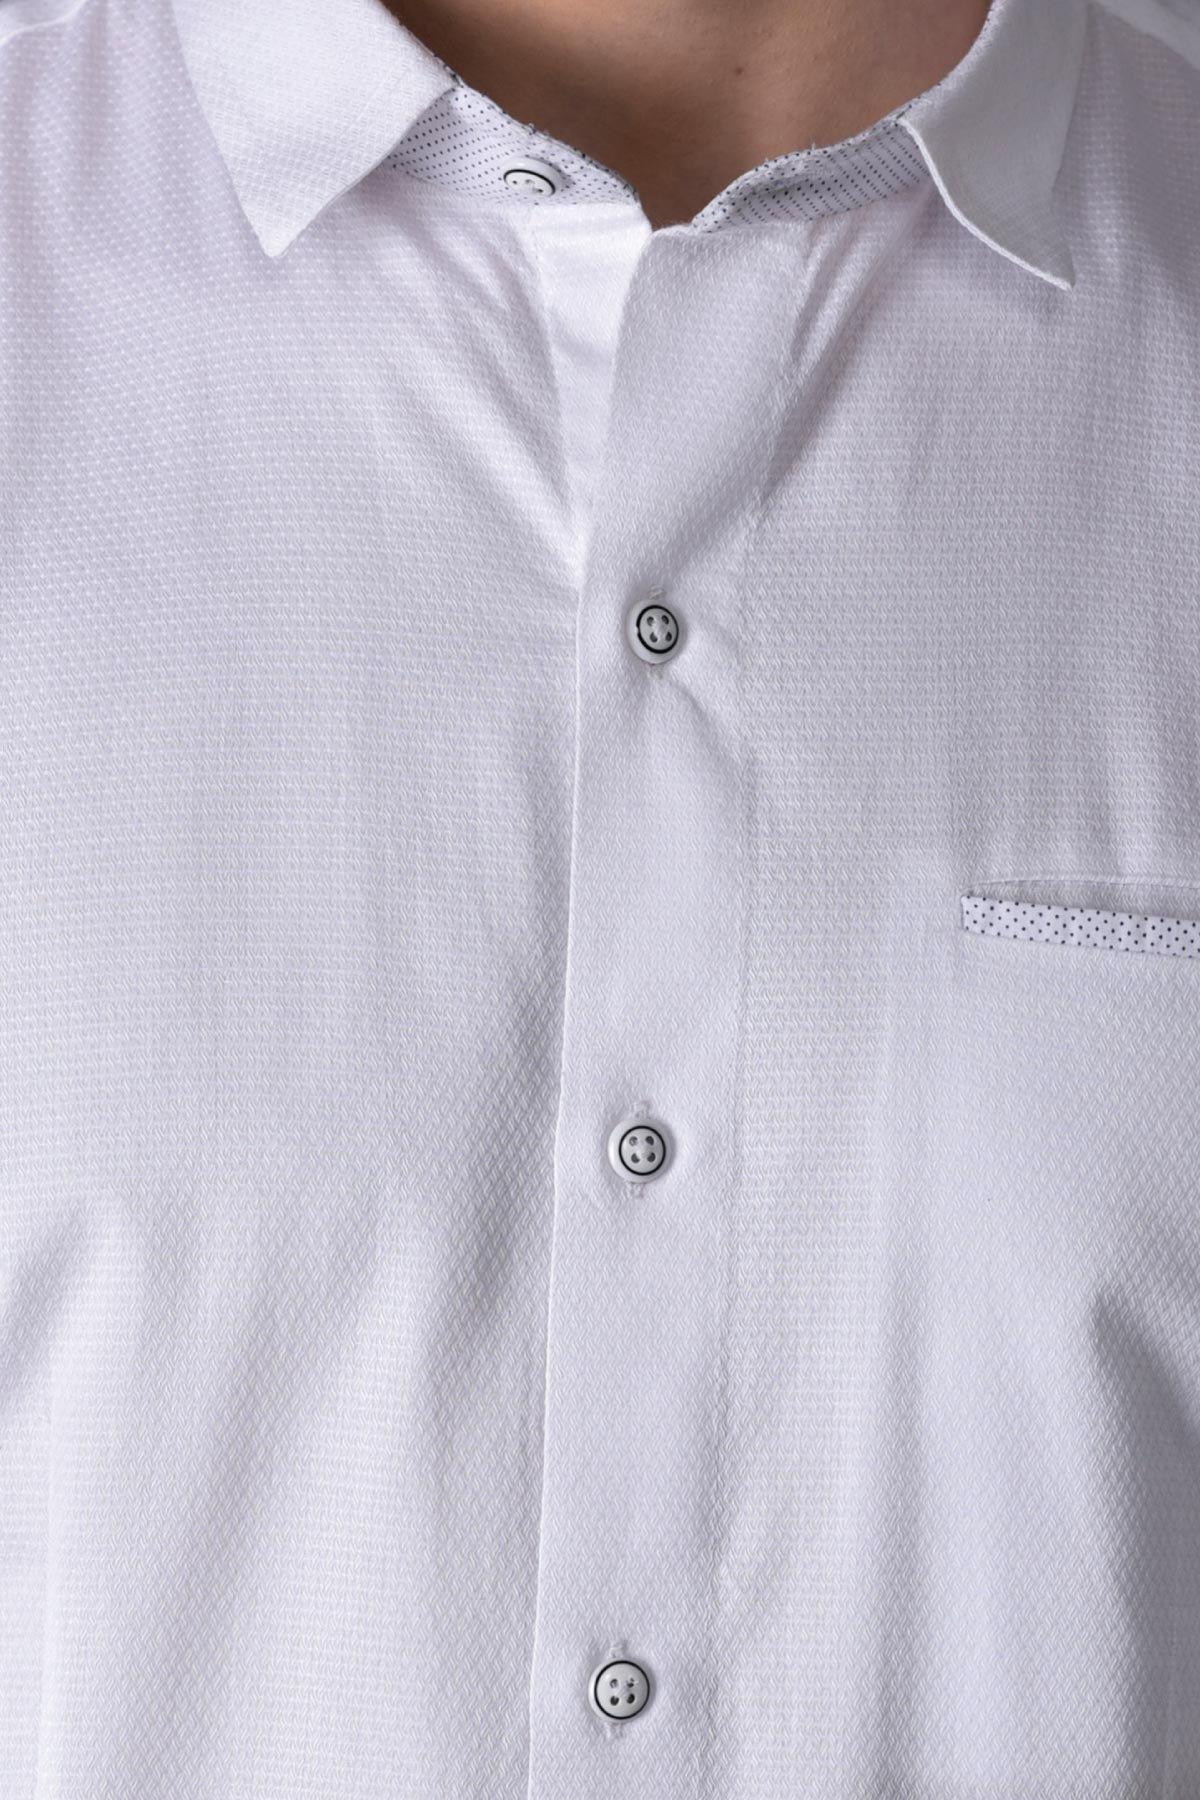 Dobby Dot Shirt - Quontico